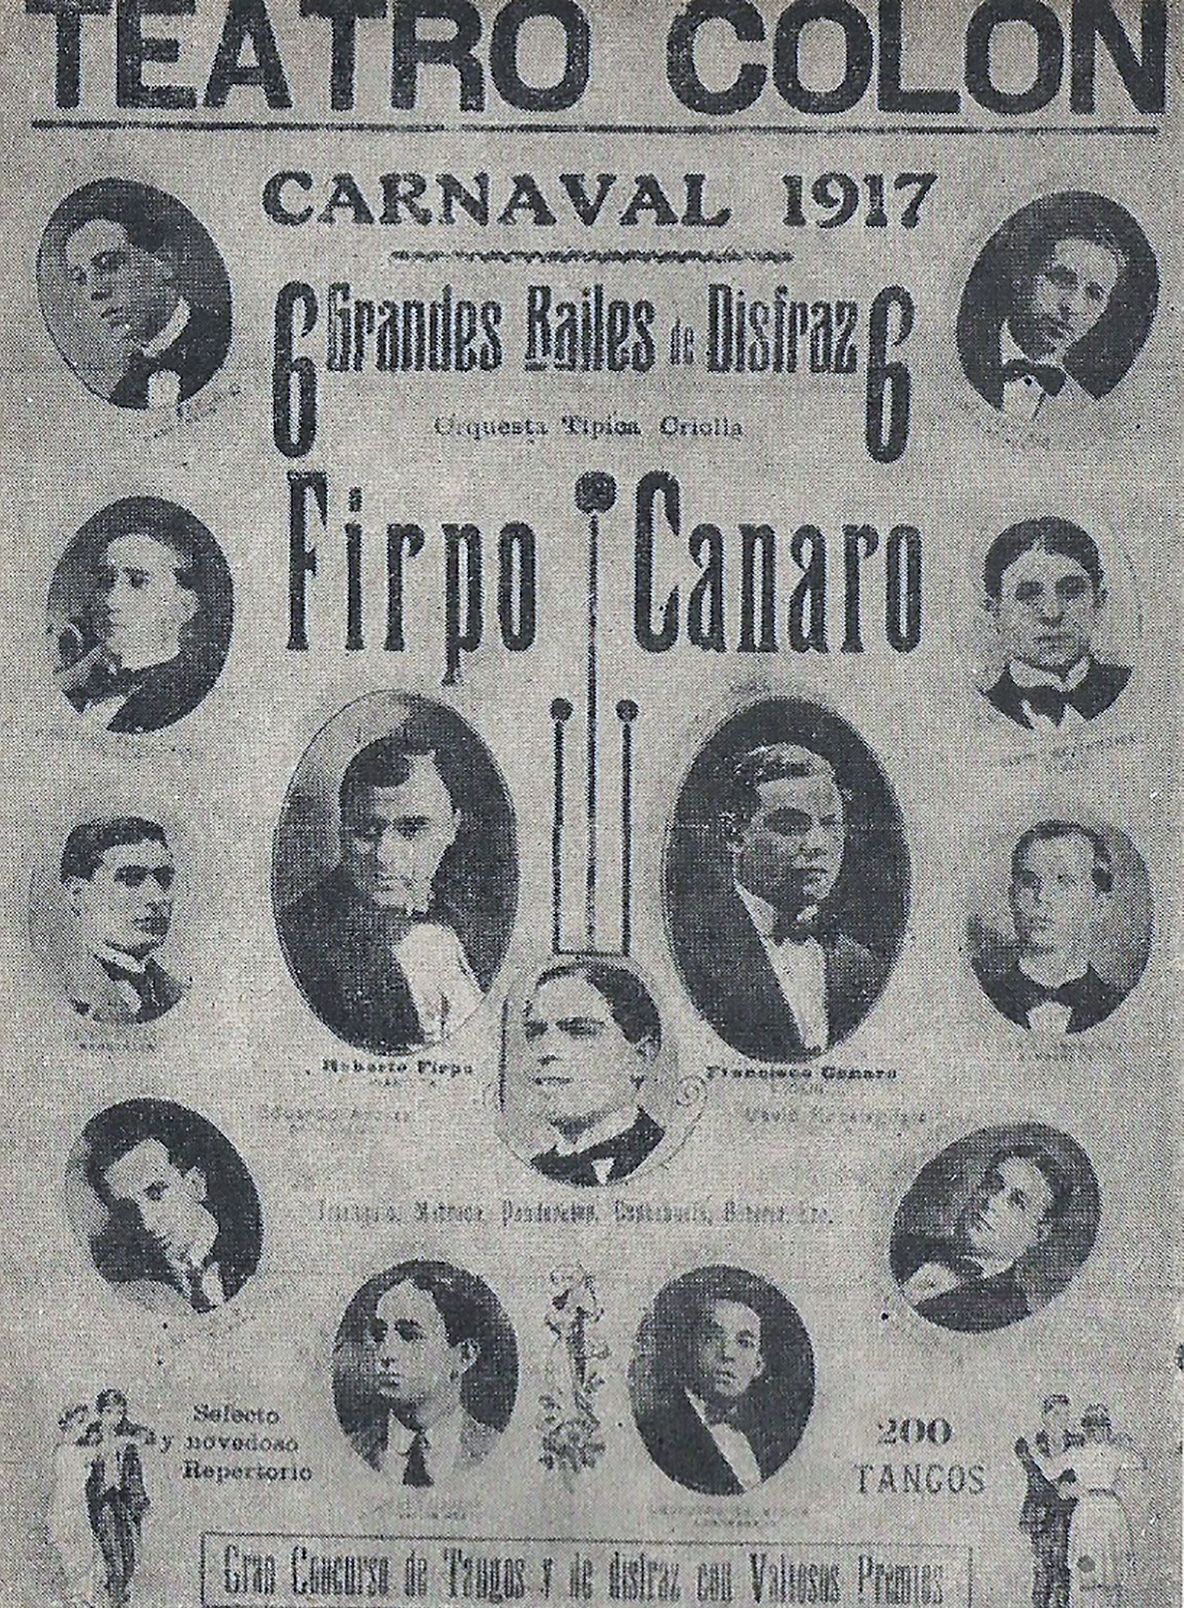 Carnival at Teatro Colón, 1917. Poster.